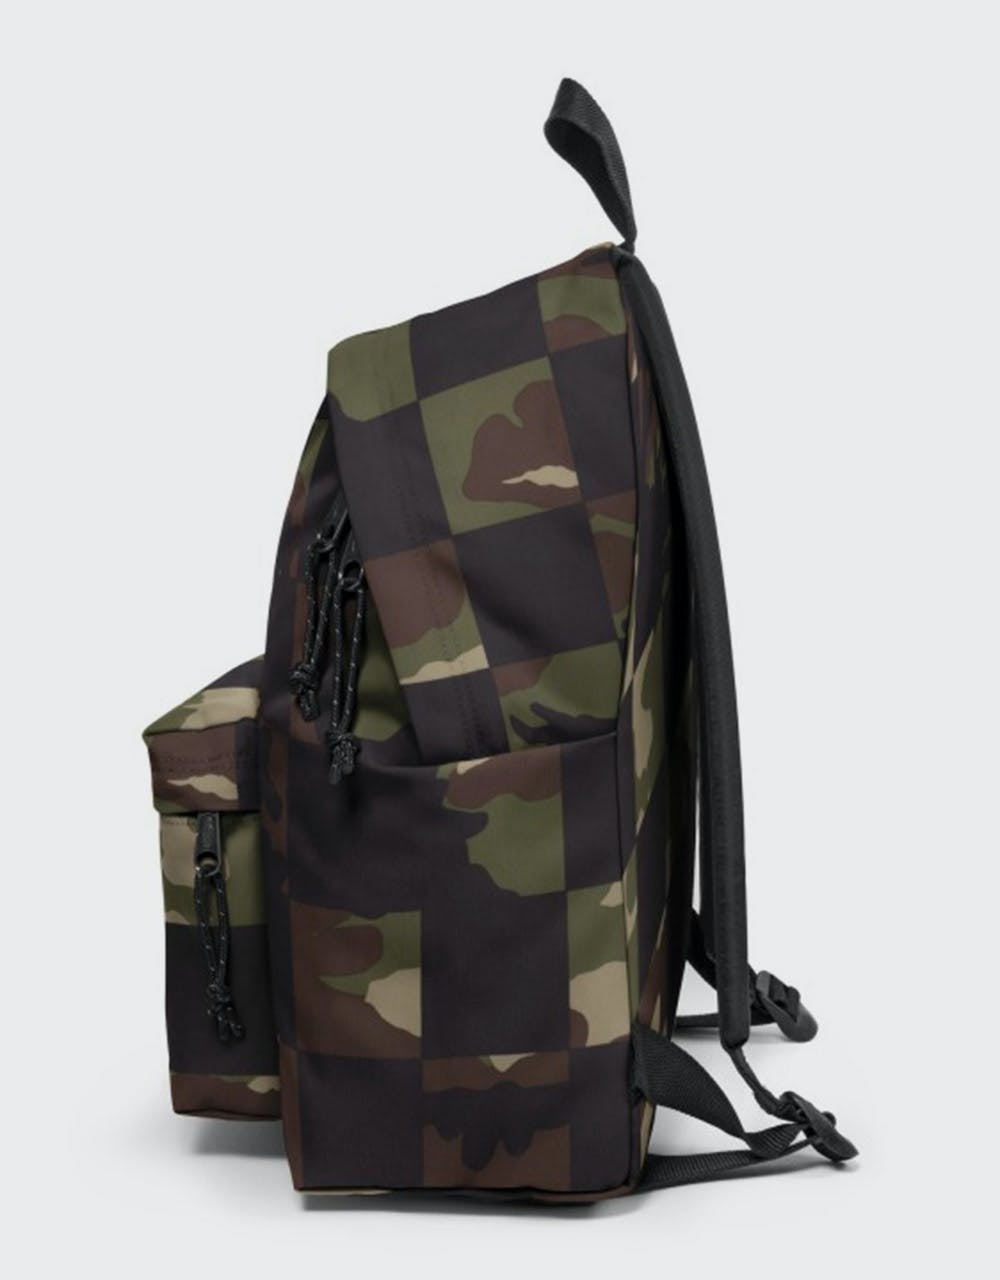 Eastpak Padded Pak'R Backpack - Camopatch Black